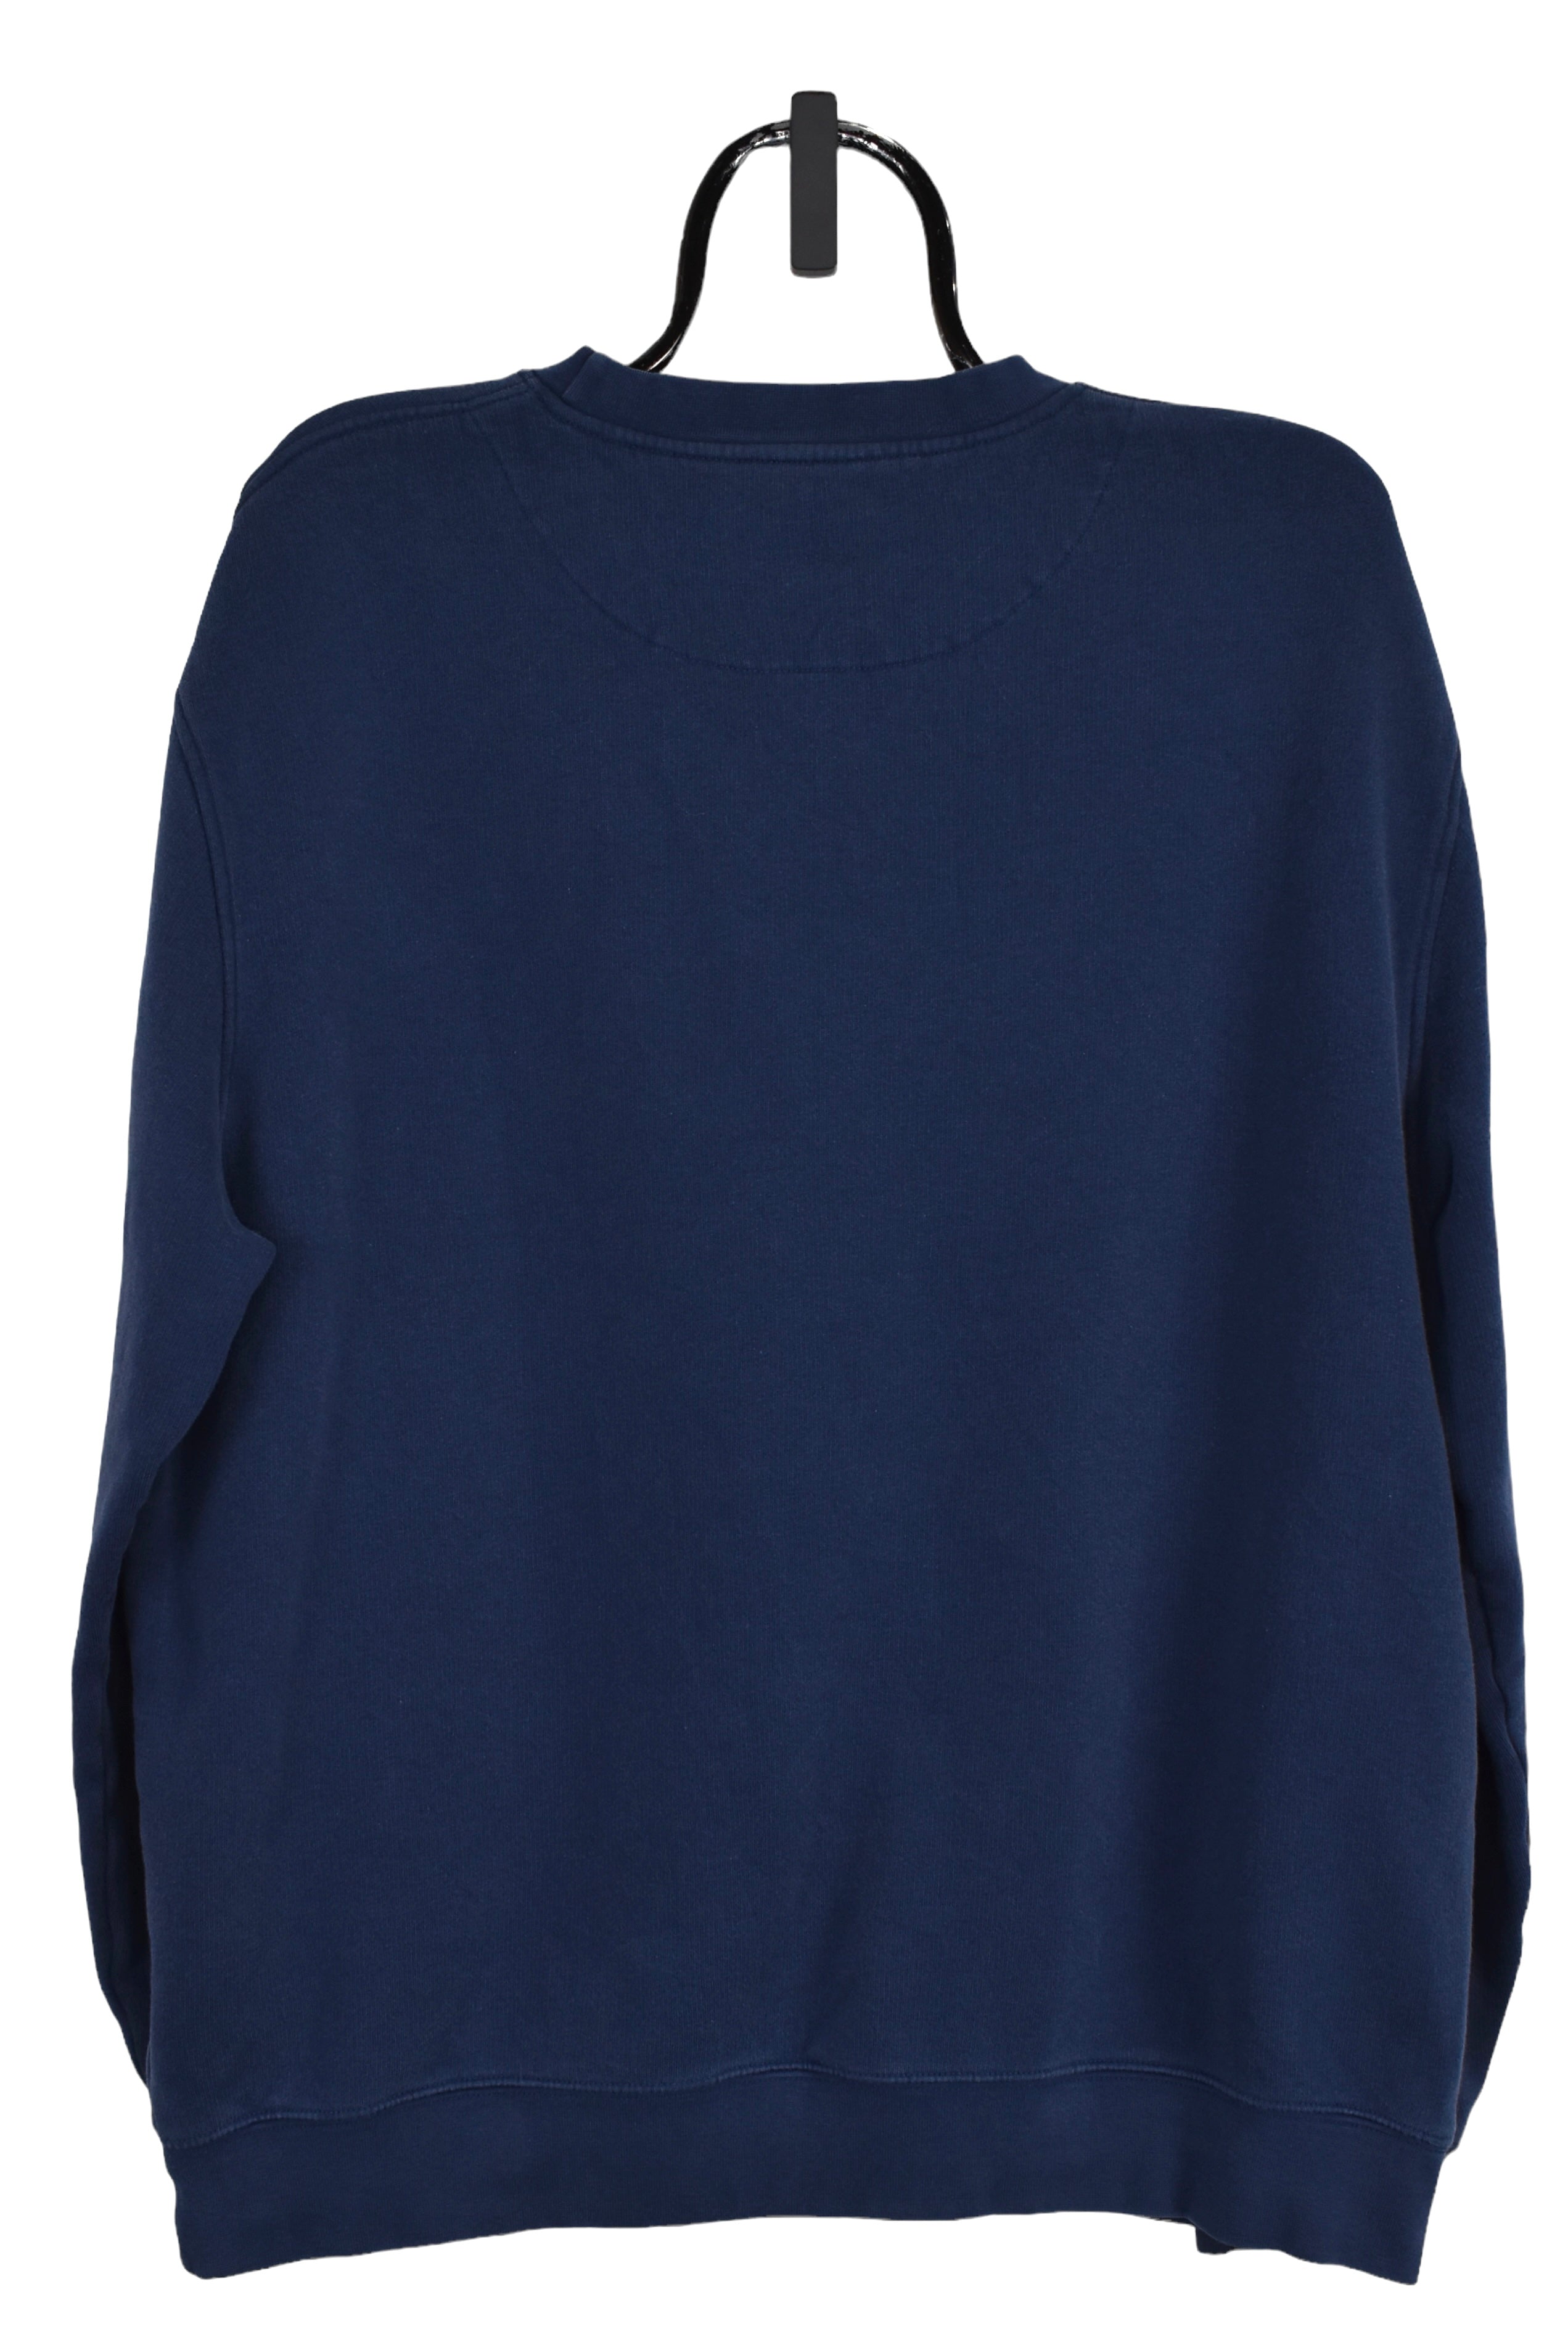 Vintage Nike sweatshirt (XL), navy embroidered crewneck